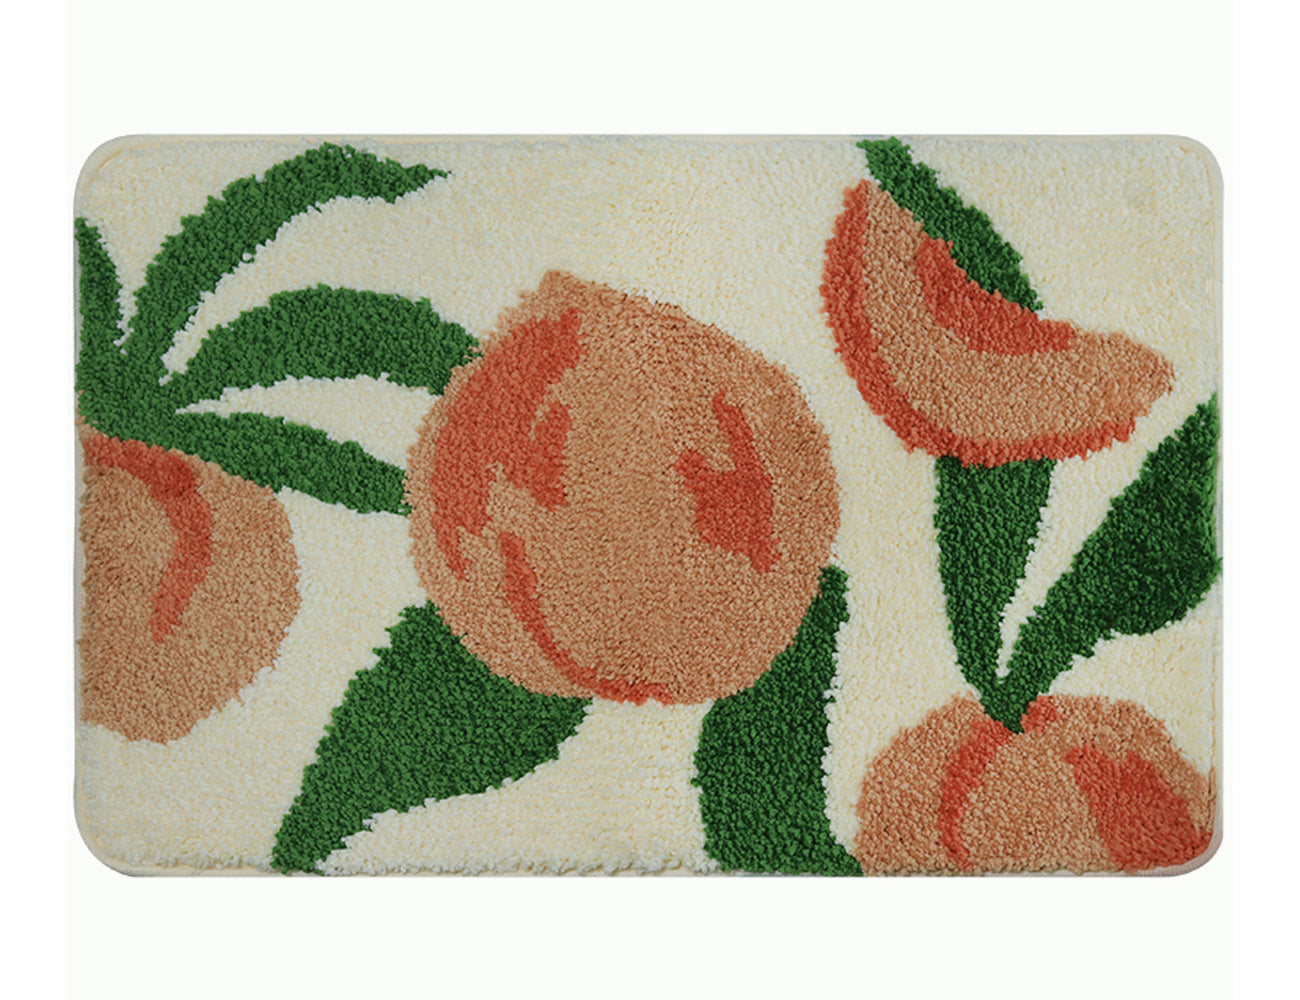 Lovely Peach Bath Mat, Green Pink Bathroom Rug, Cute Fresh Fruit Decor for Home, Housewarming Gift Idea for Nature Lover, 50x70cm or 19x27 inches - Feblilac® Mat